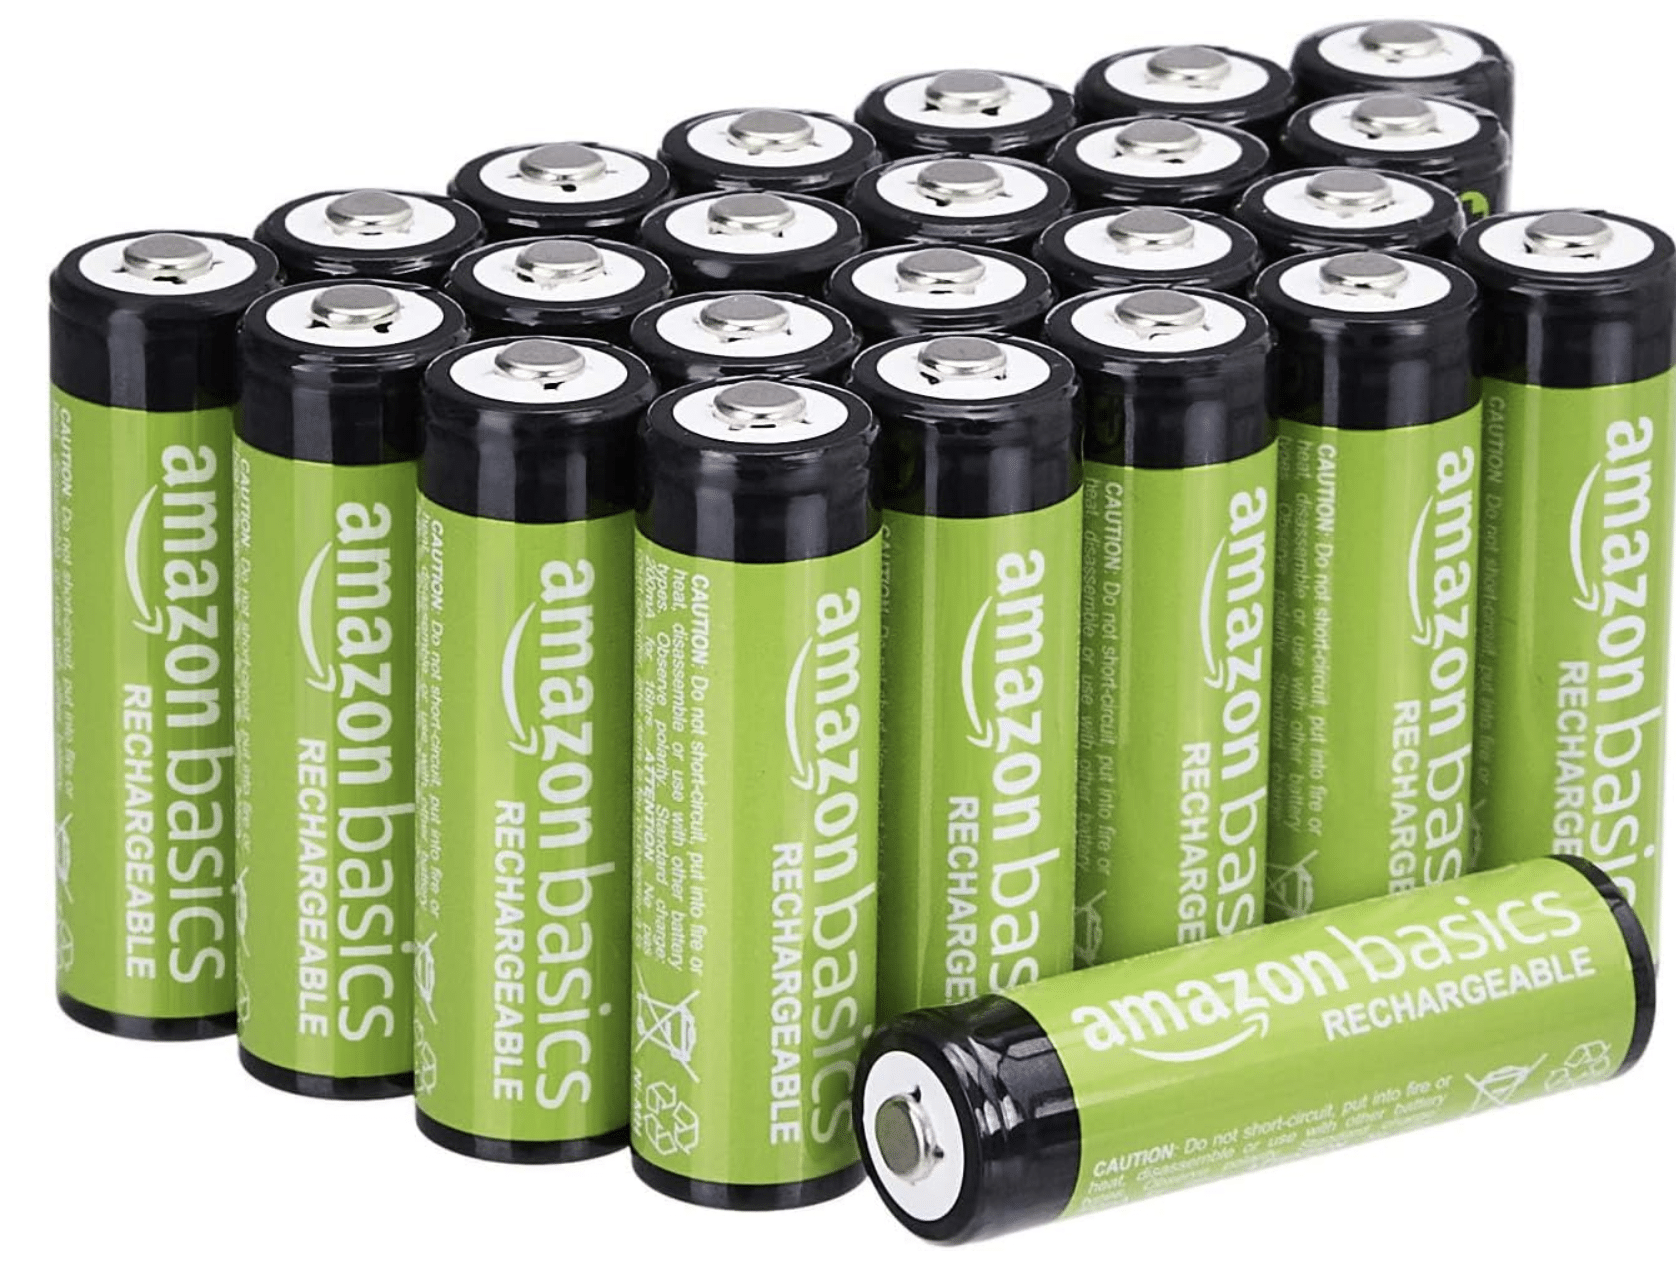 Thumbnail Amazon Basics AA-Batterien, wiederaufladbar, 2000 mAh, vorgeladen, 24 Stück